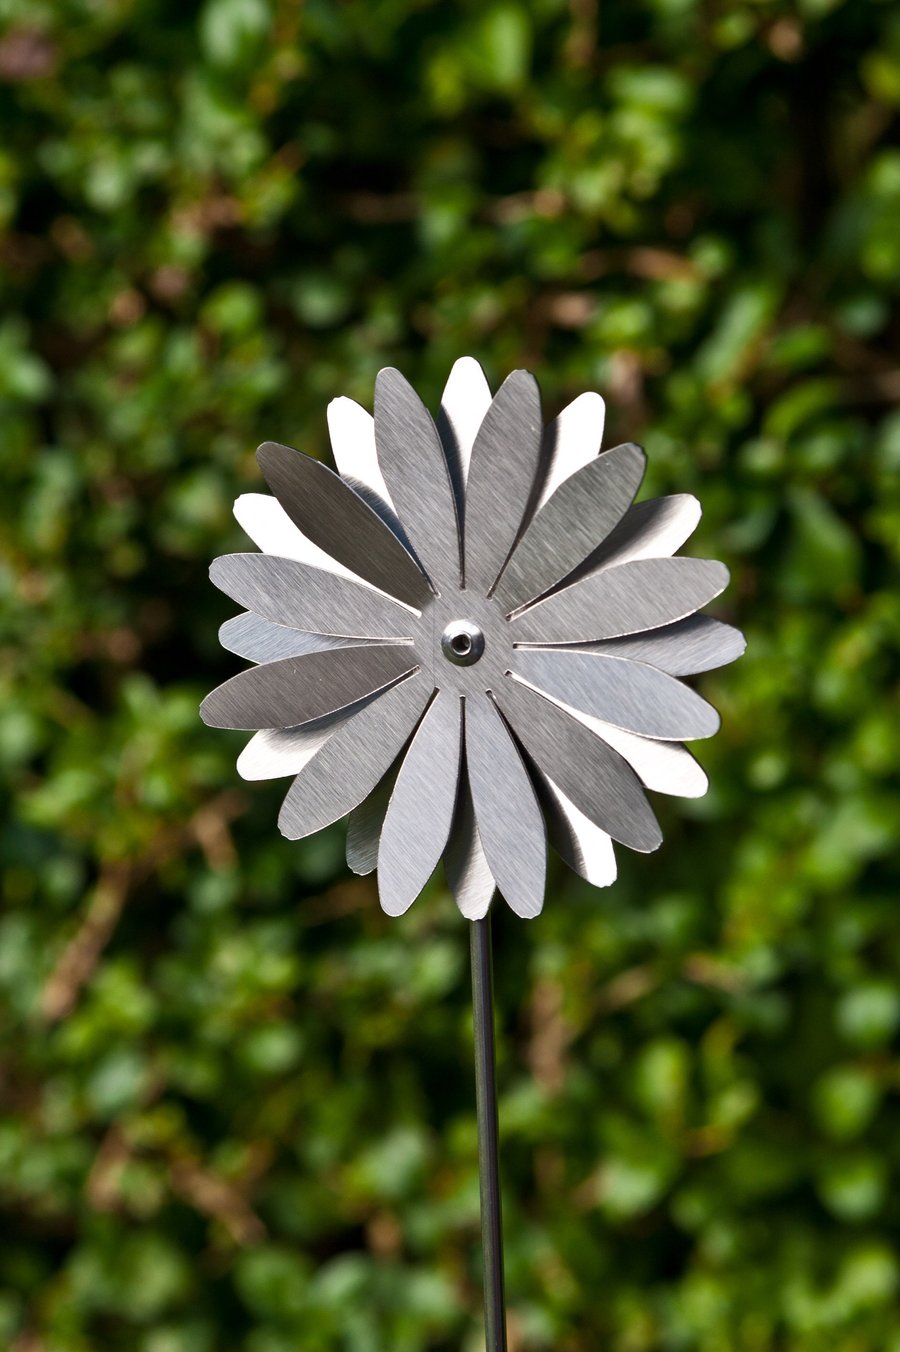 Stainless Steel Daisy Metal Flower stem, Silver Flower, Home & Garden Ornament